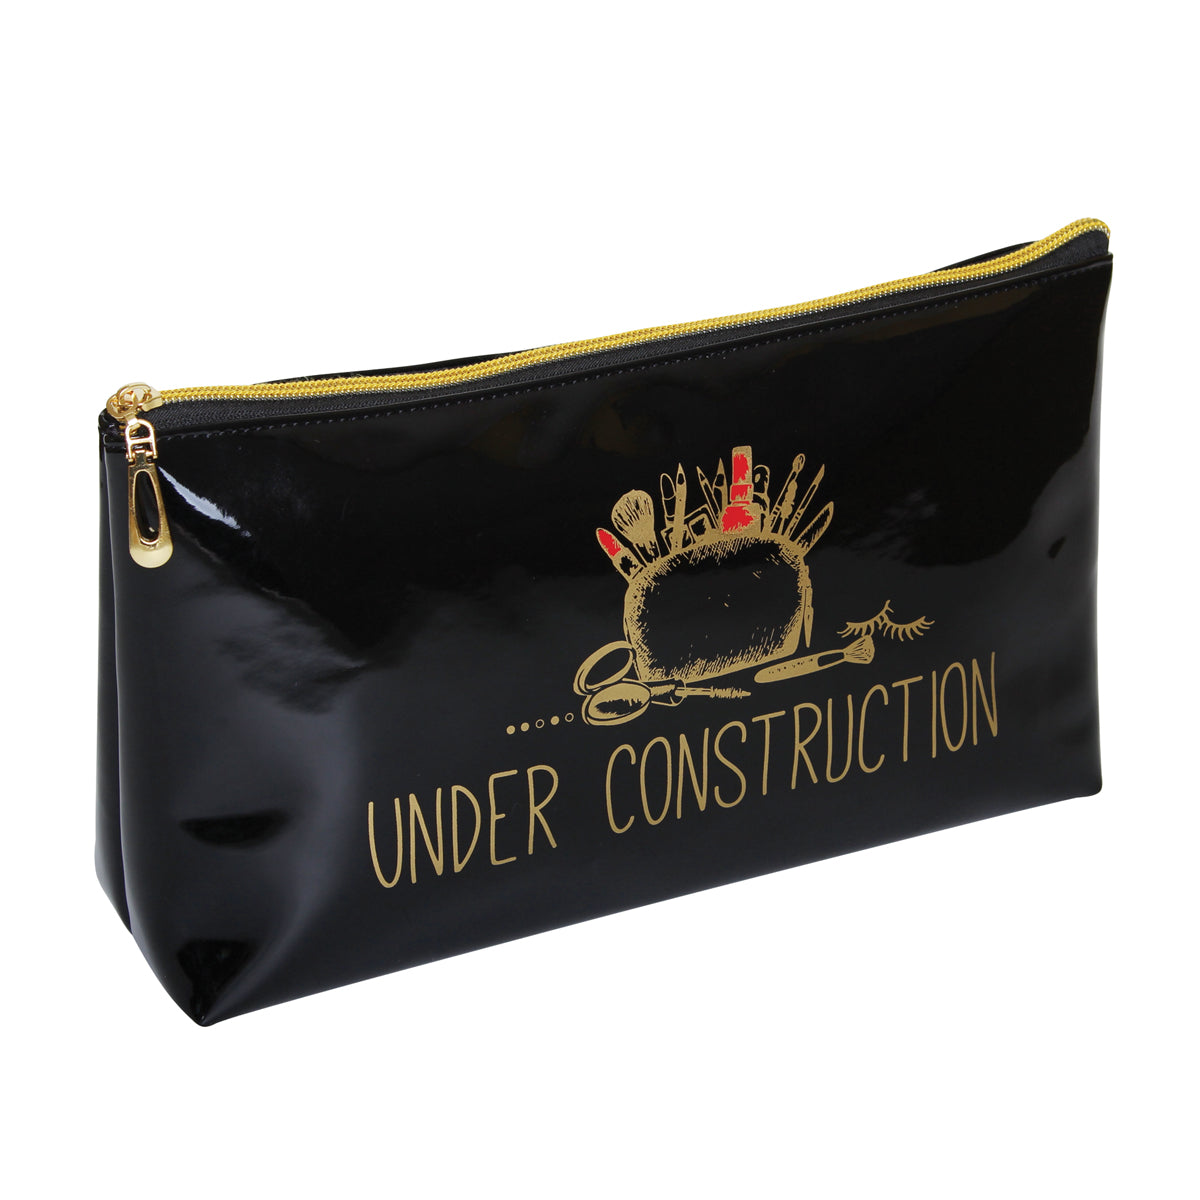 Fancy Metal Goods 'Under Construction' Cosmetic/Toiletry Bag